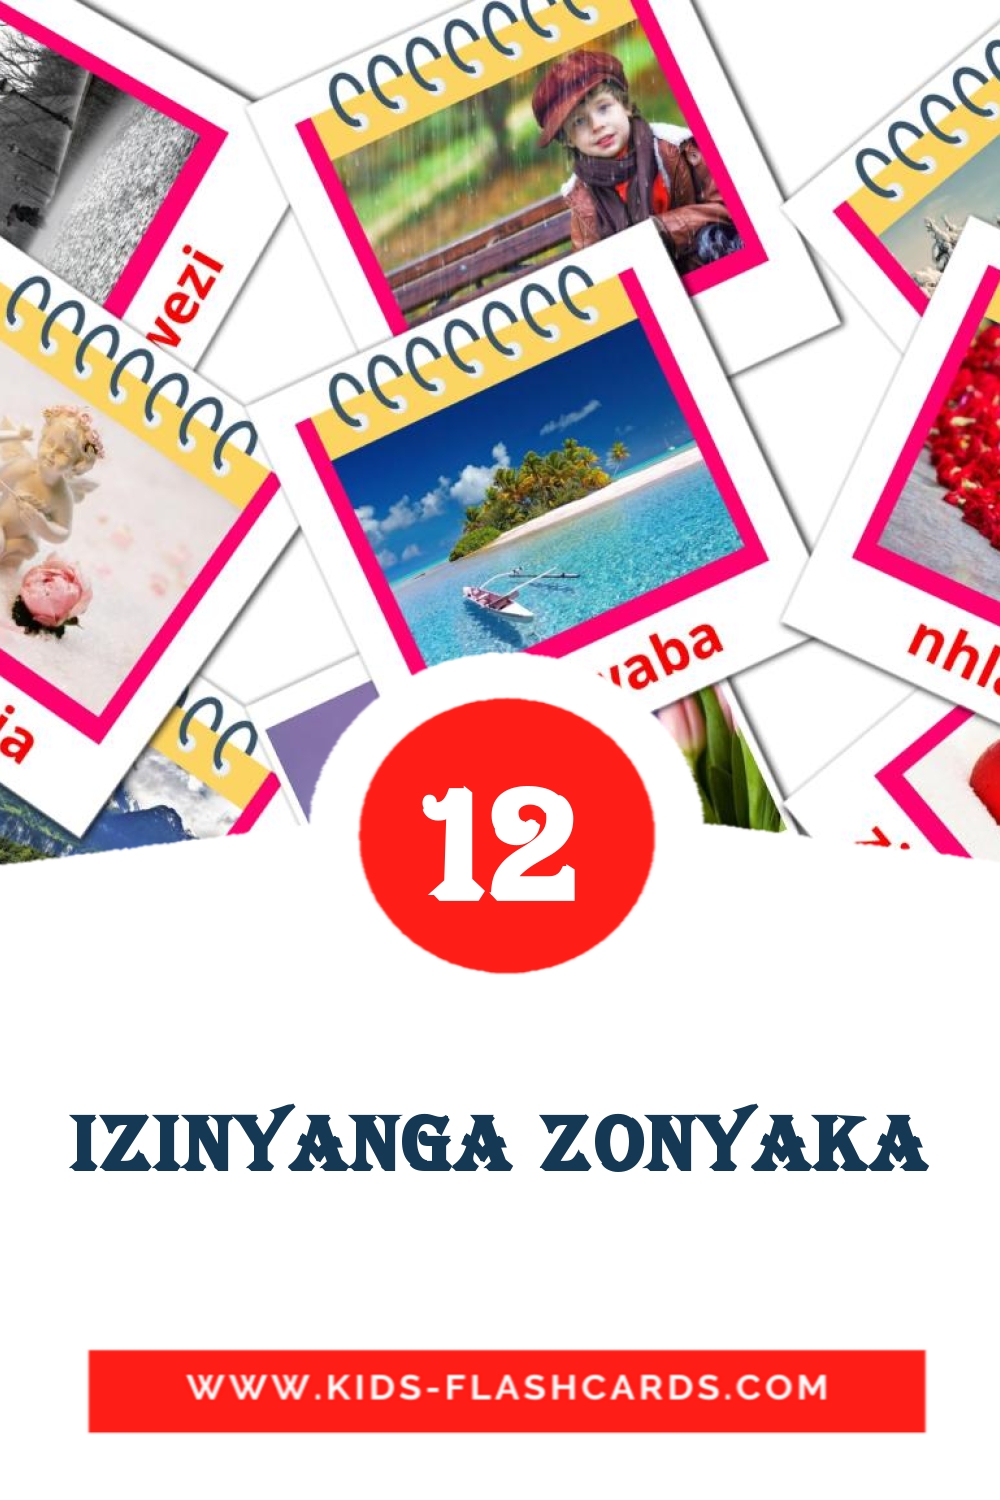 12 tarjetas didacticas de Izinyanga zonyaka para el jardín de infancia en zulú